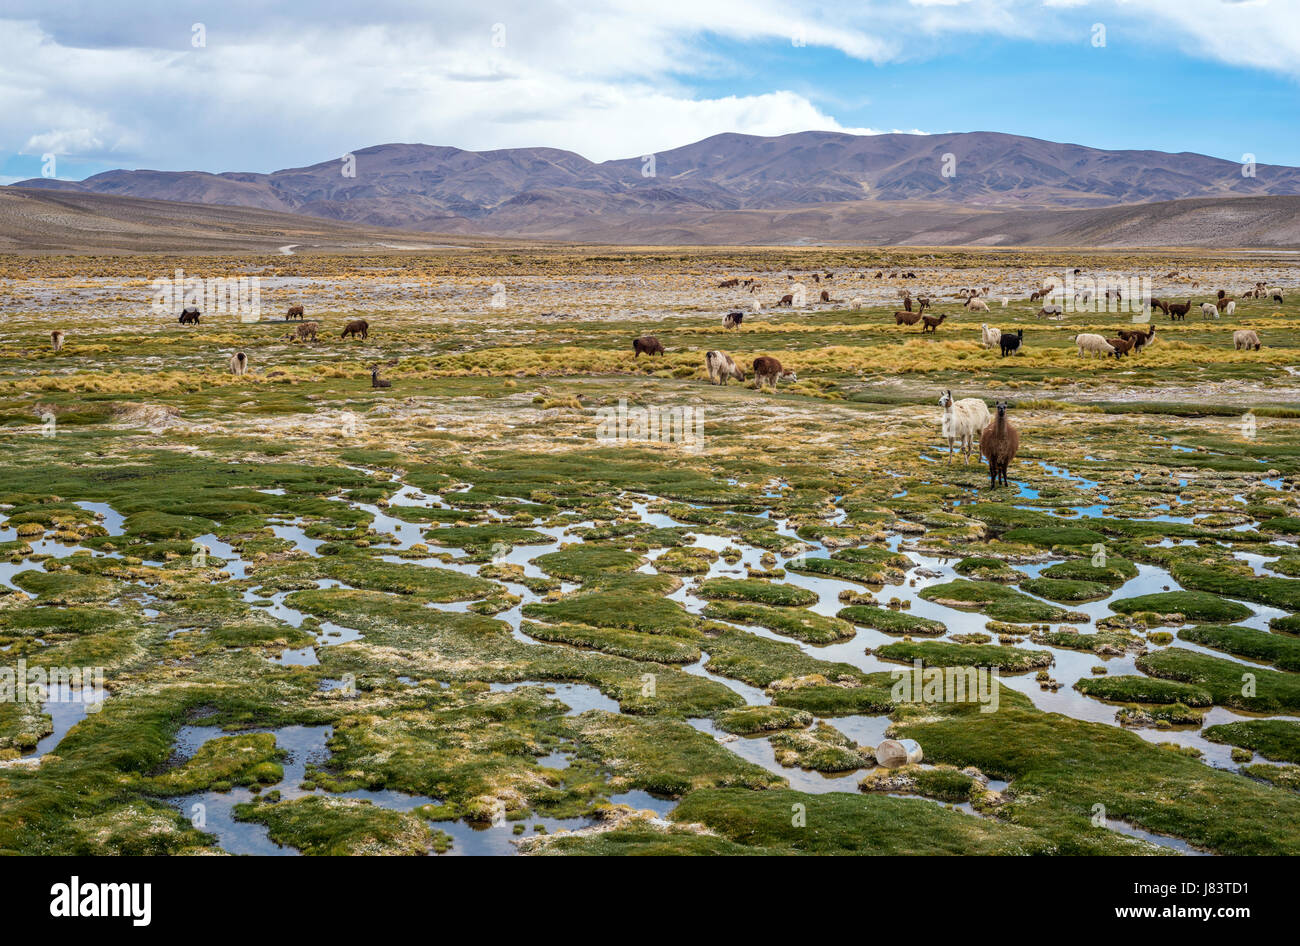 Llamas and alpacas graze in the mountains near Paso de Jama, Argentina-Chile Stock Photo